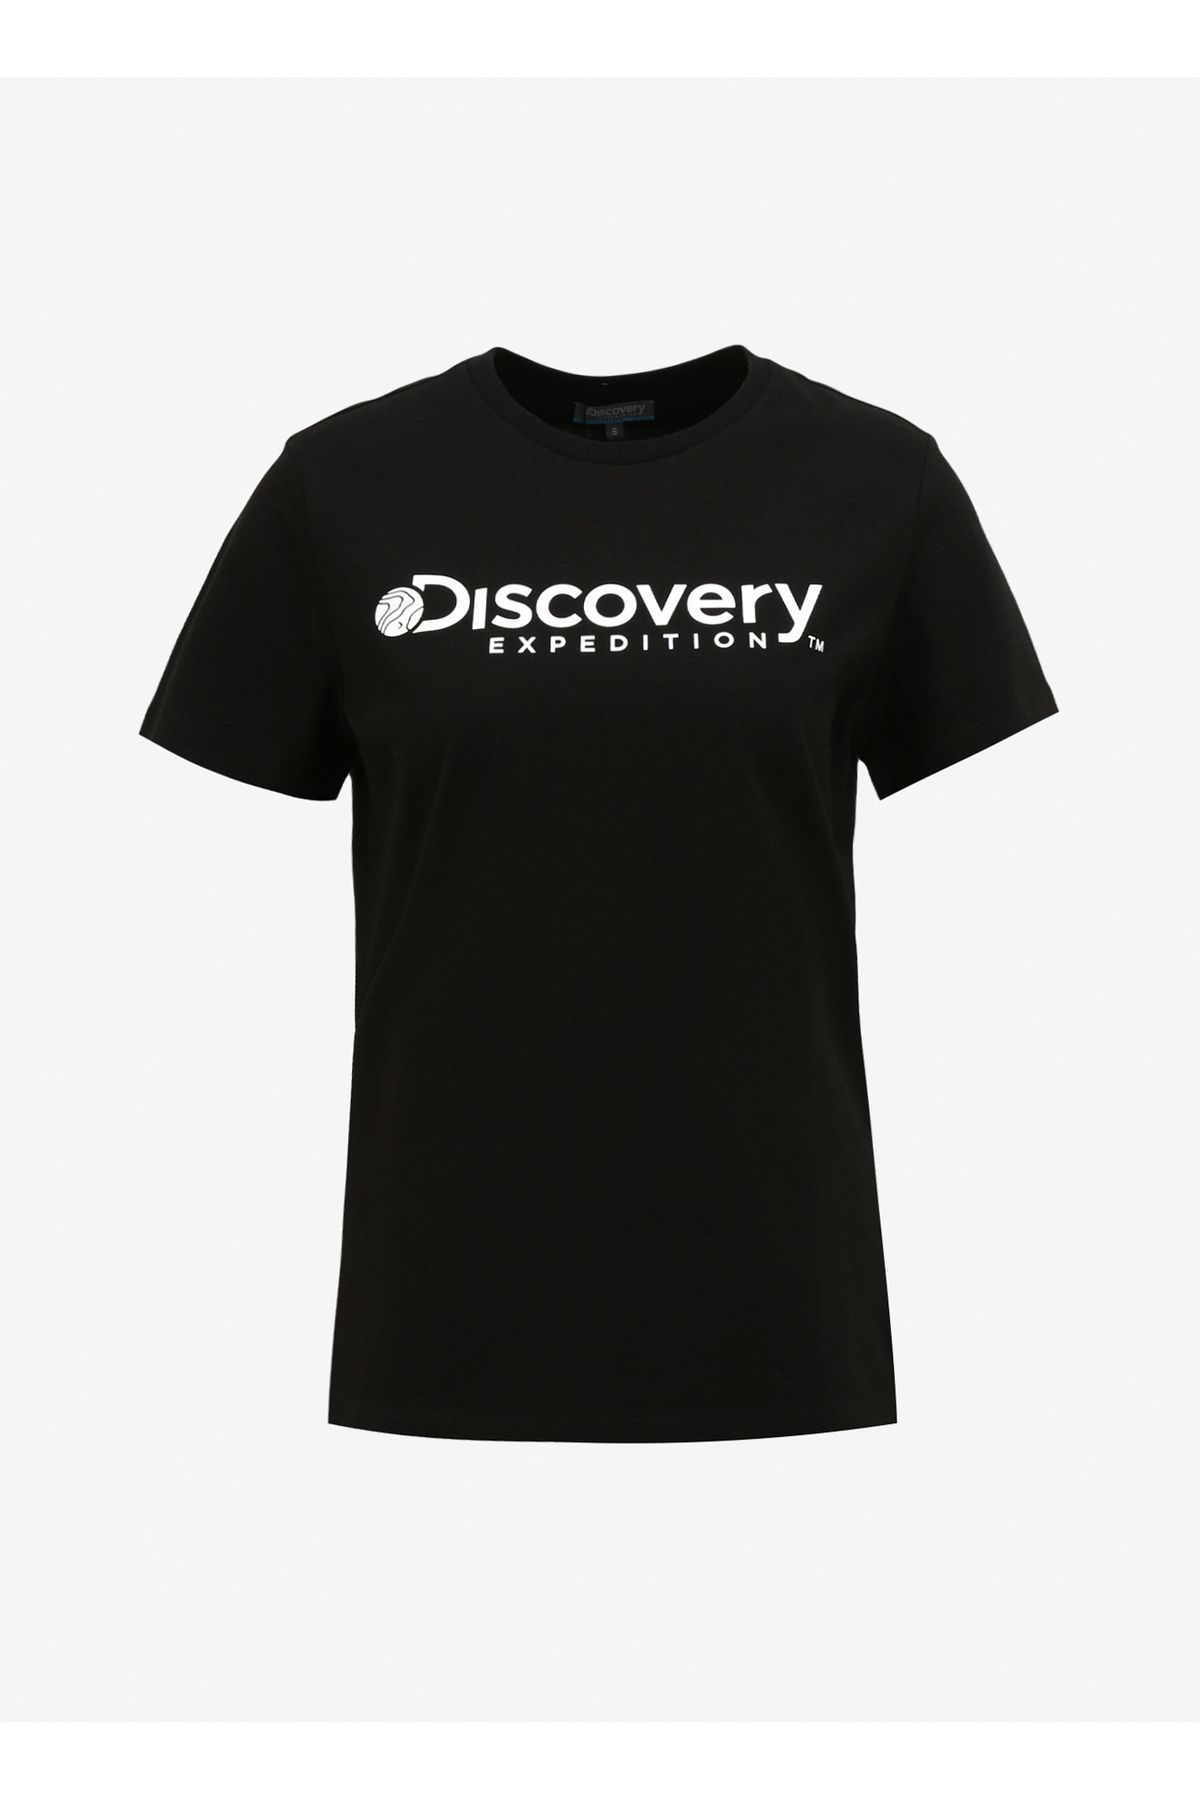 Discovery Expedition Siyah Kadın Bisiklet Yaka T-shirt D4sl-tst3053